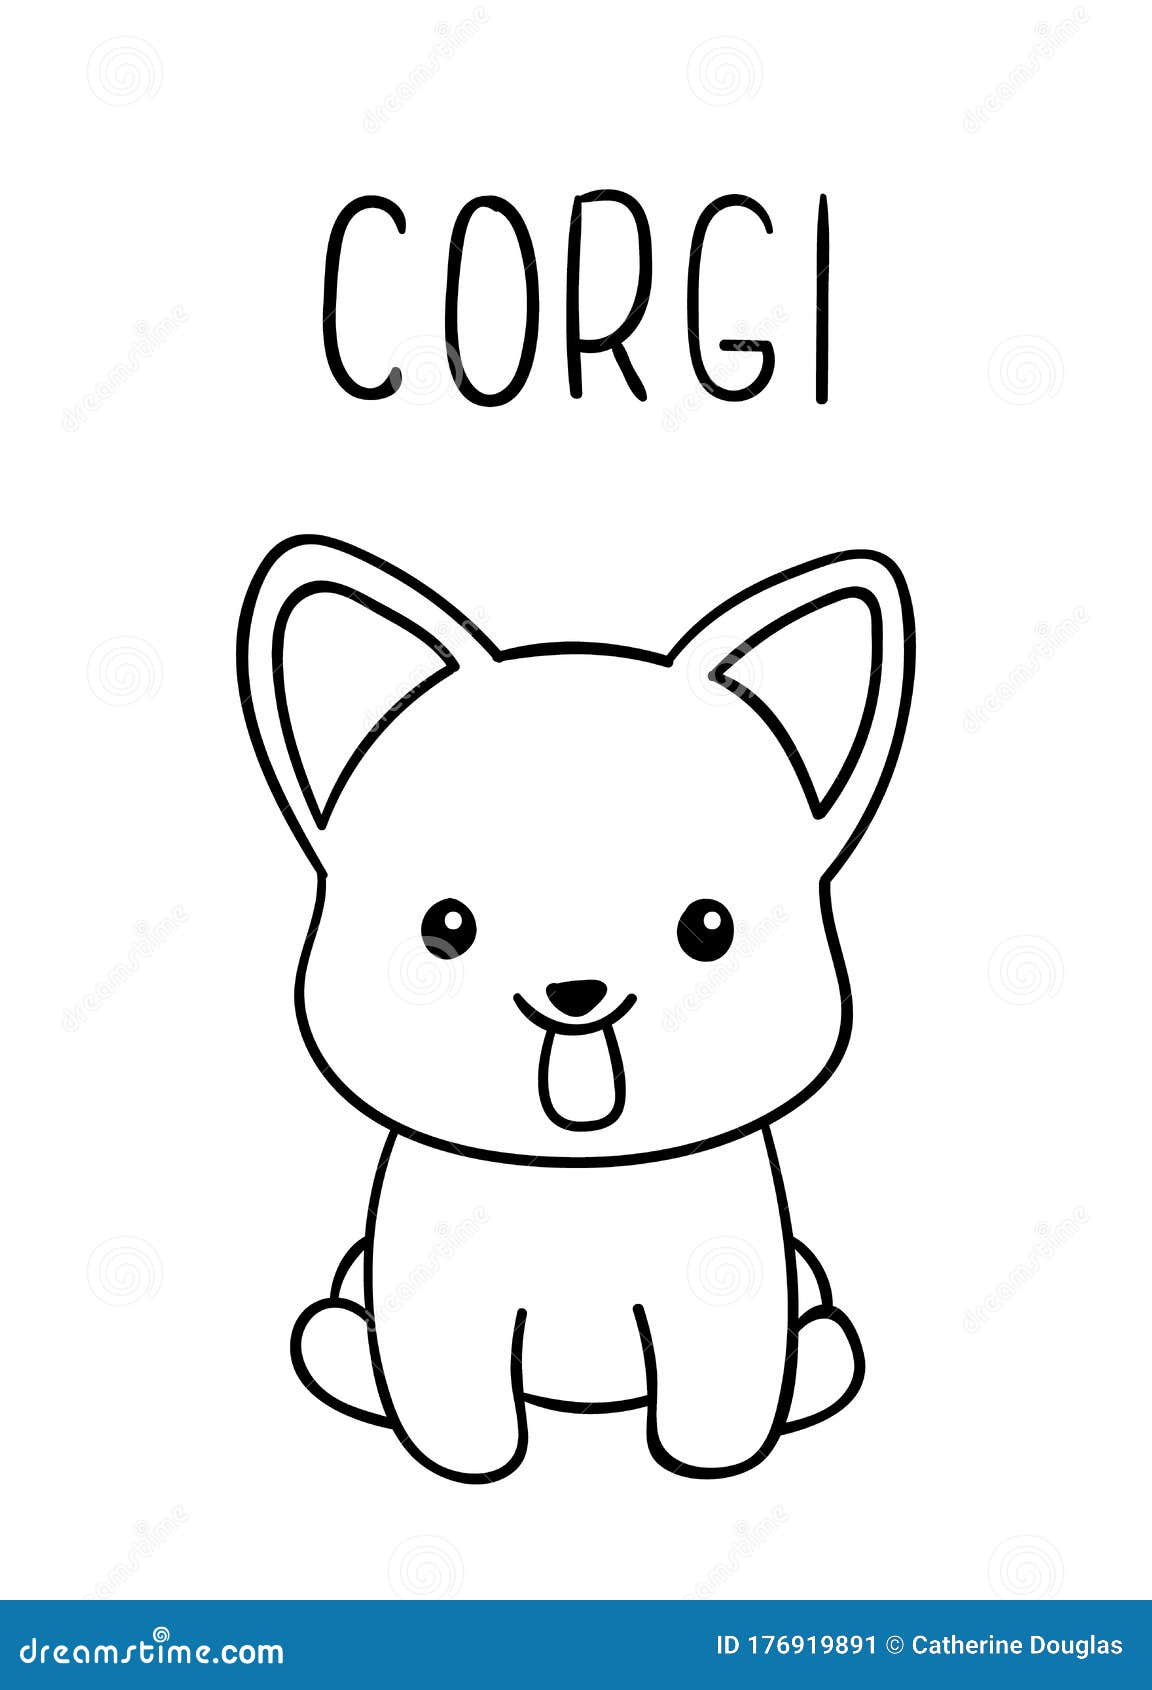 Coloring pages black and white cute kawaii hand drawn corgi dog doodles lettering corgi stock vector